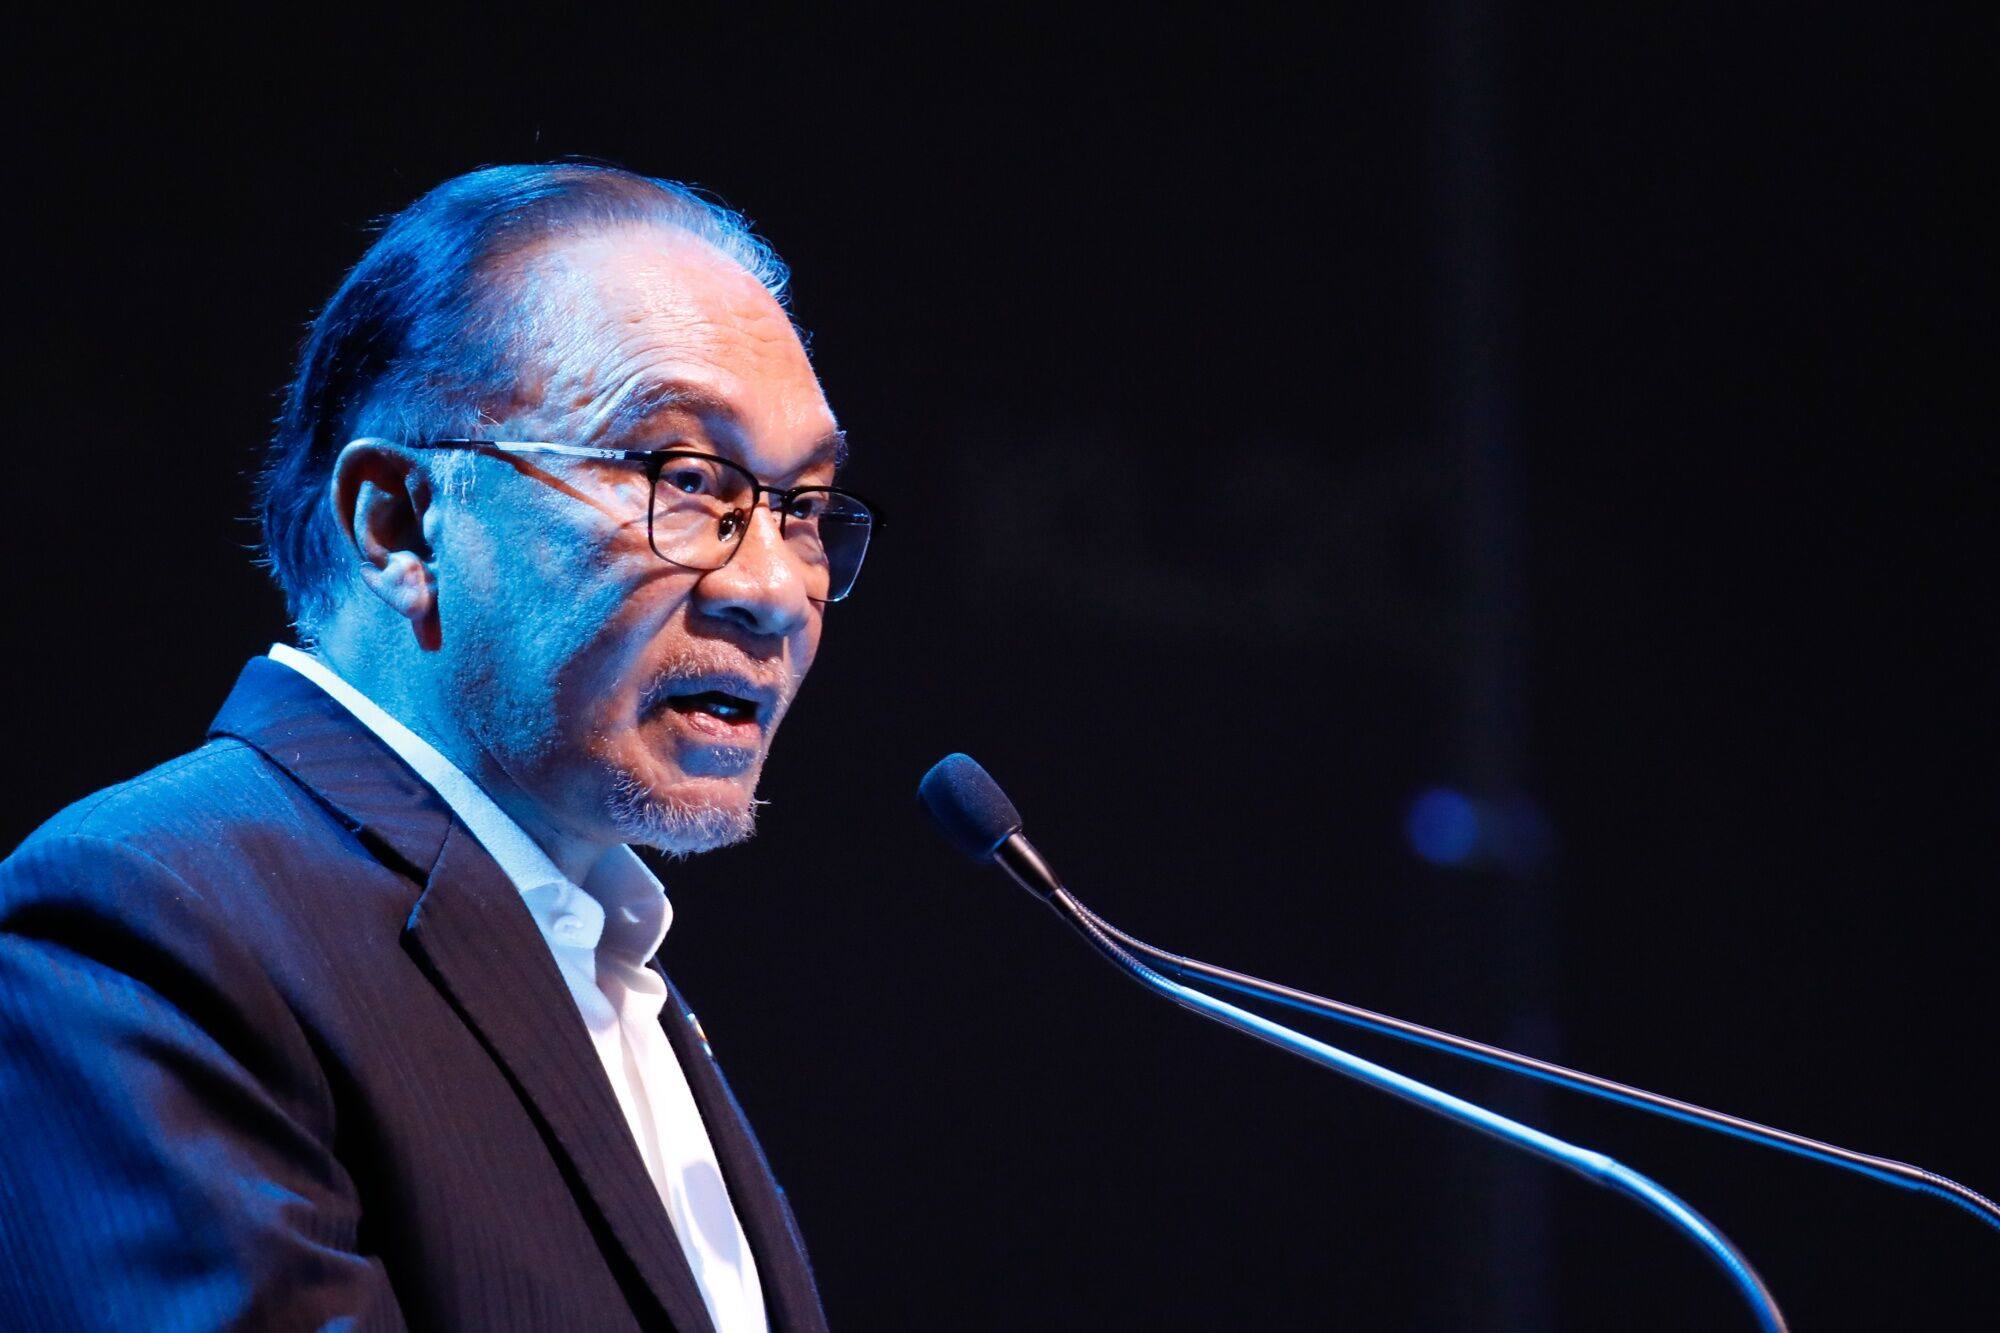 Prime Minister Anwar Ibrahim at the KL20 Tech Forum in Kuala Lumpur, Malaysia, on April 22. Photo: Bloomberg